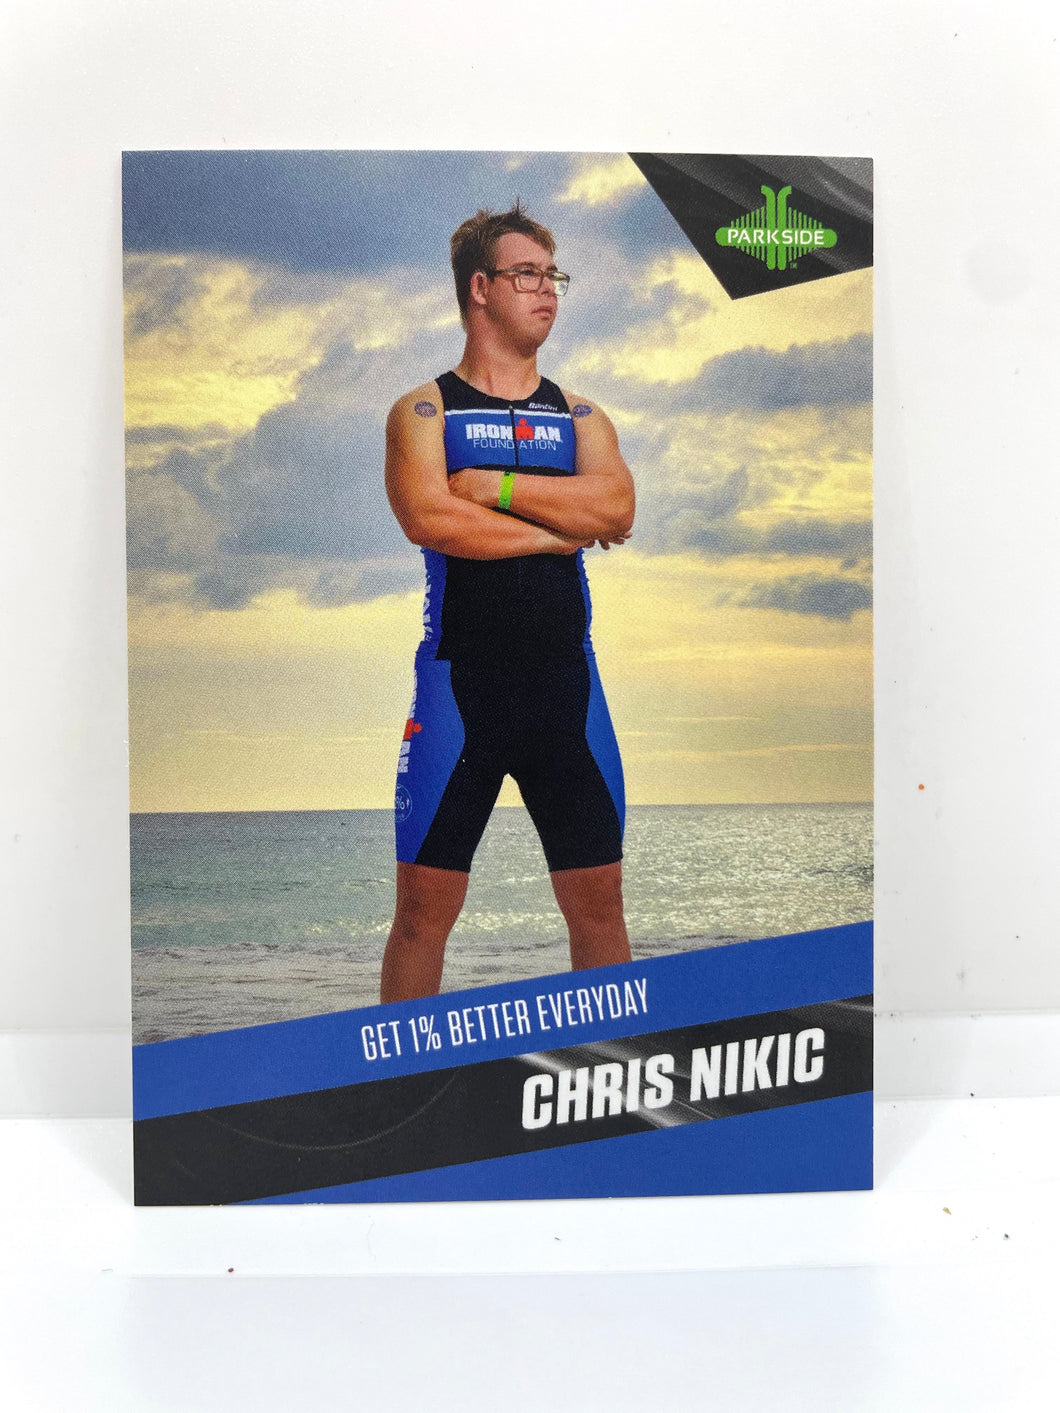 Collectible Trading Card - Chris Nikic